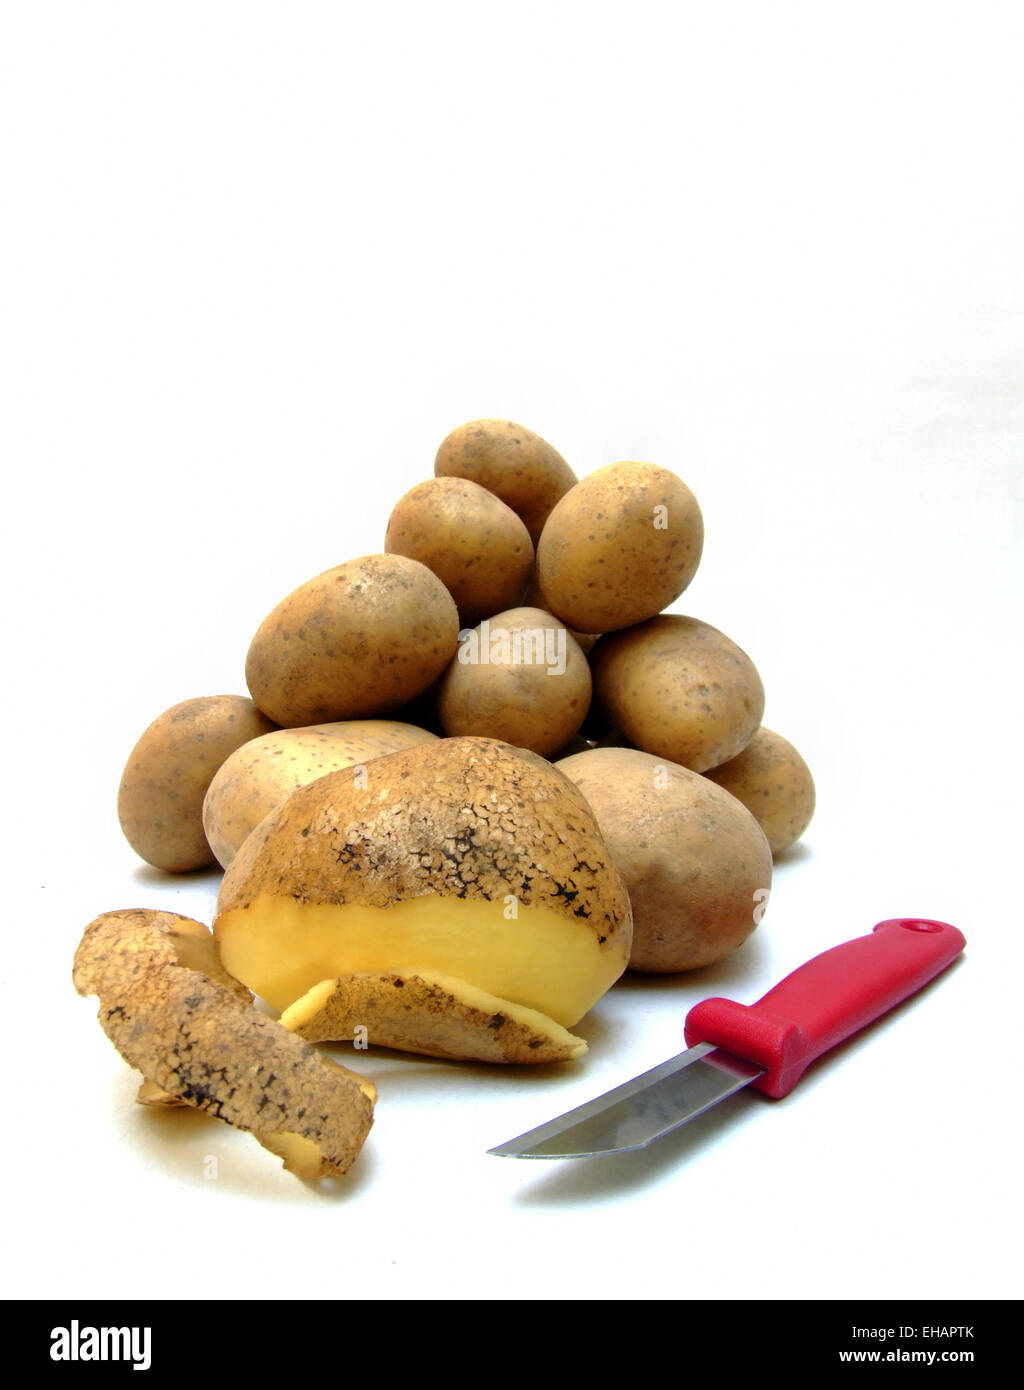 Kartoffeln schälen / to shell potatoes Stock Photo